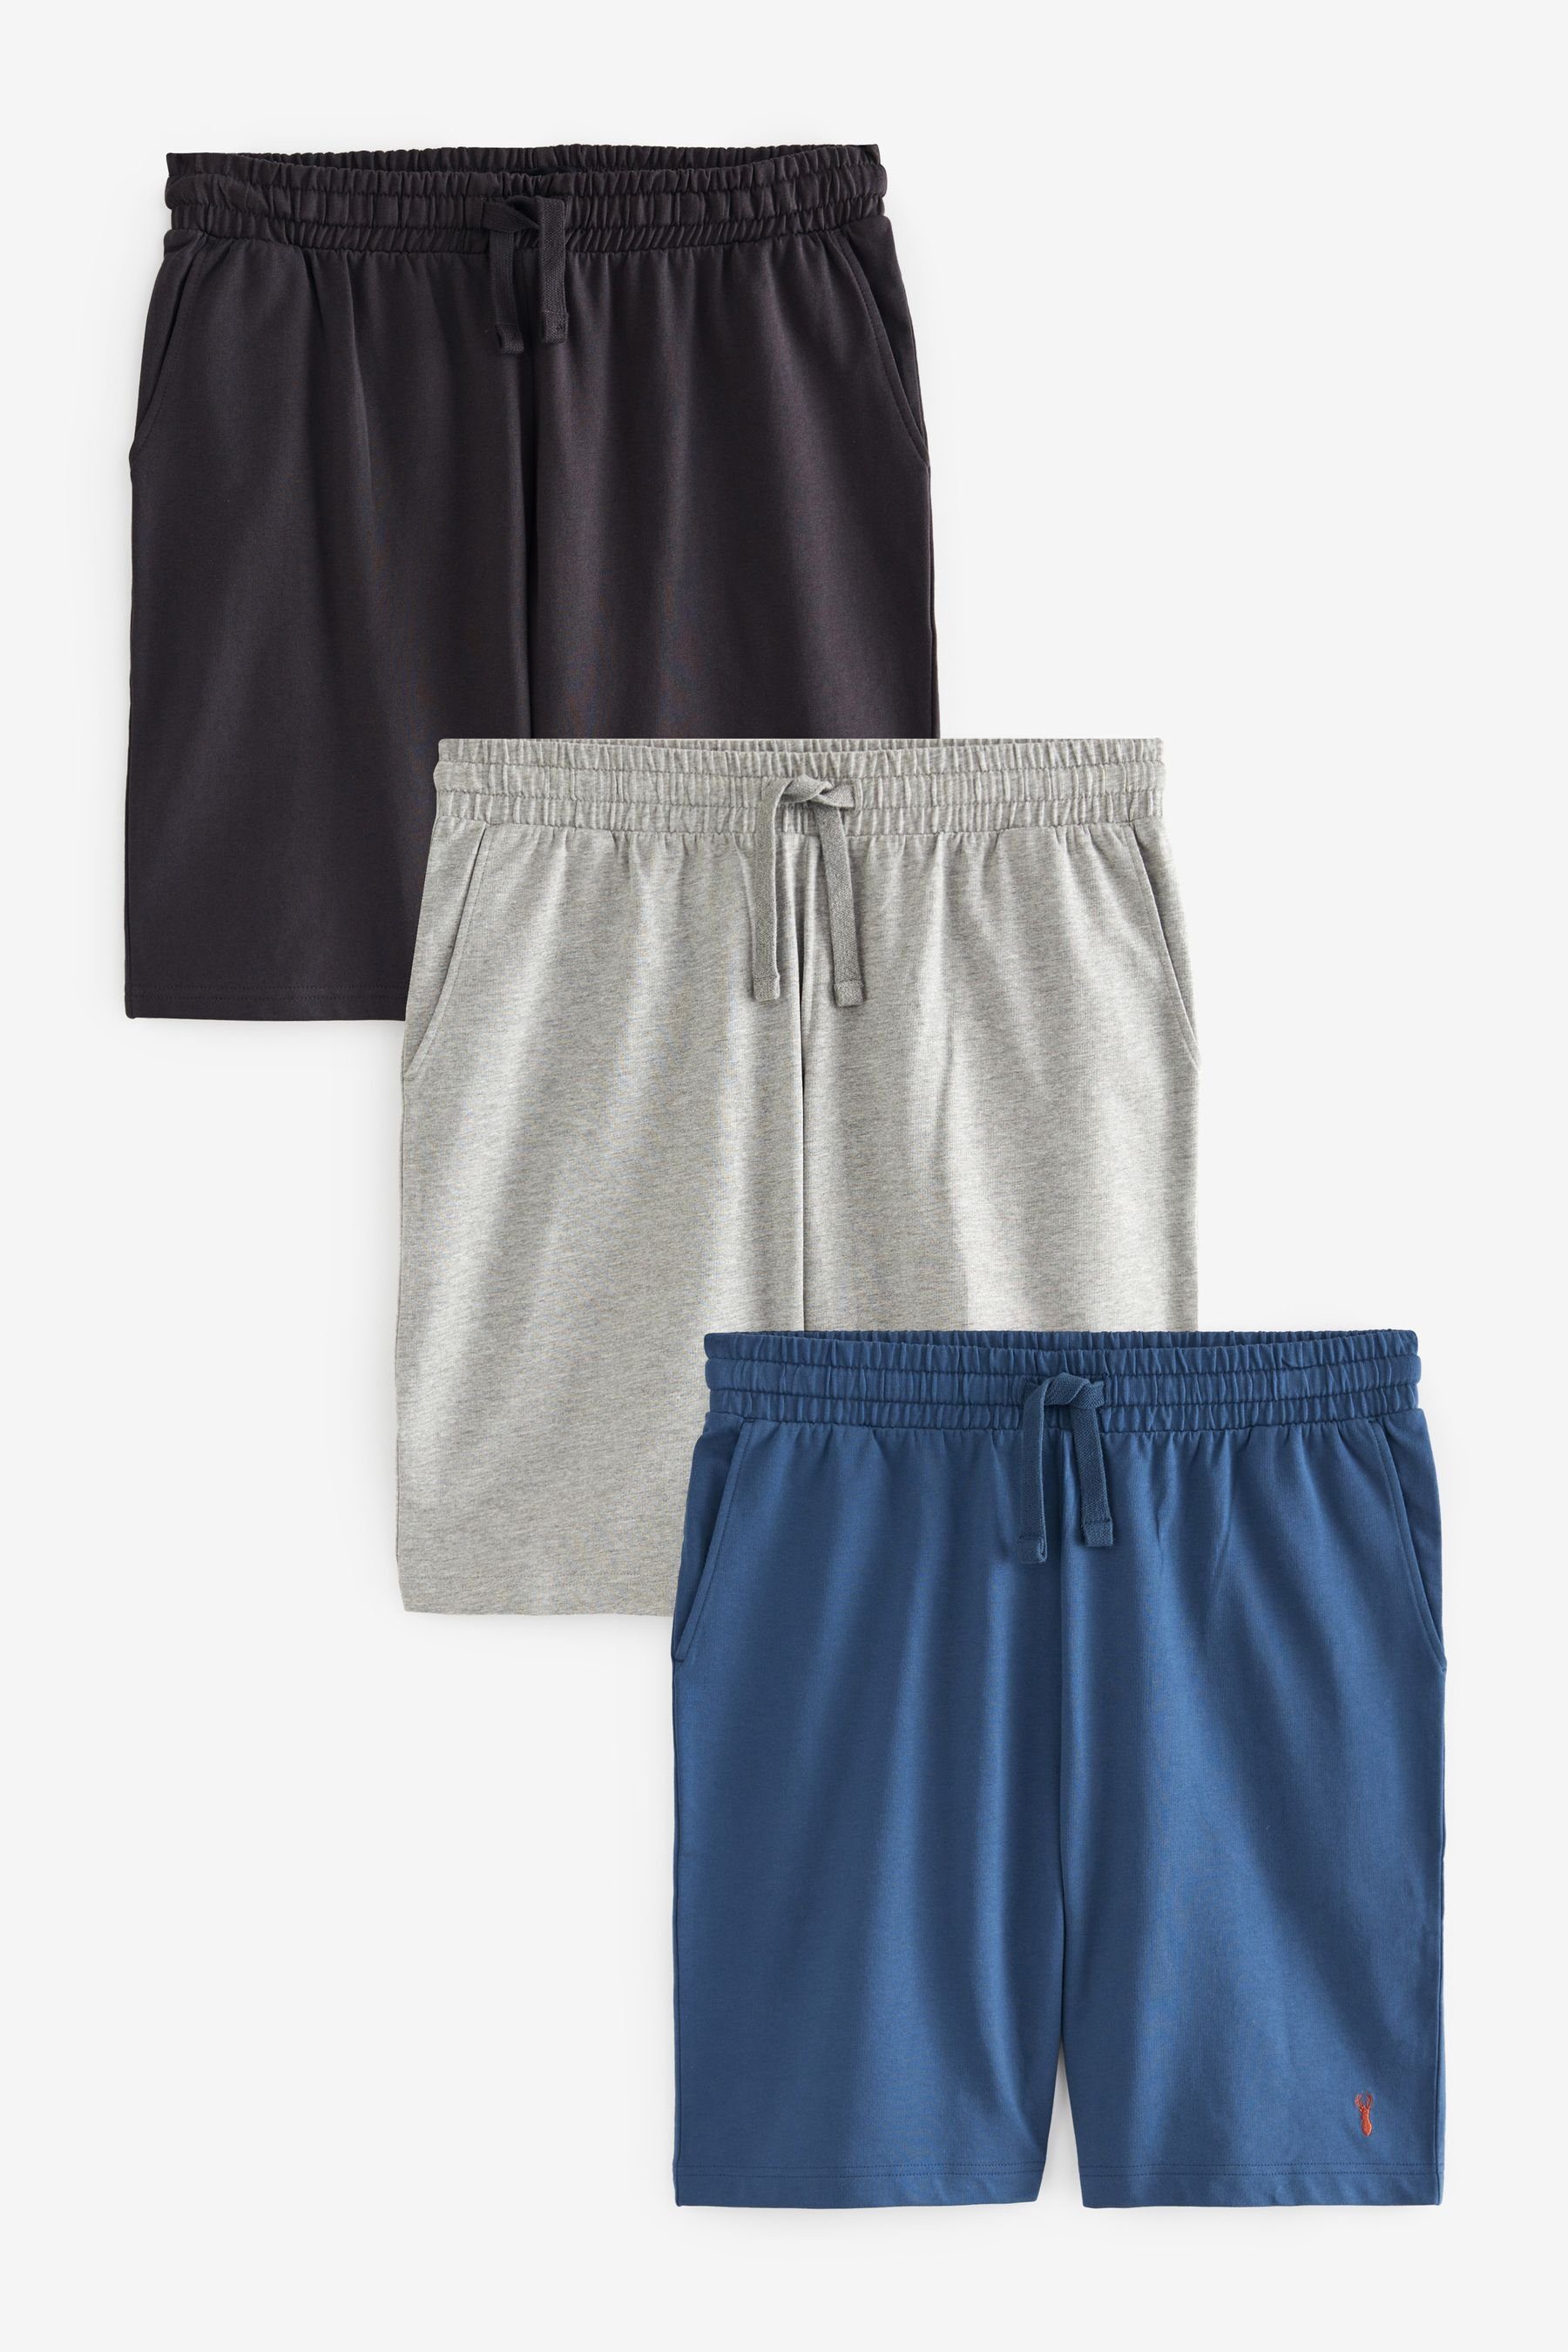 Next Schlafshorts Leichte Shorts, 3er-Pack (3-tlg) Grey/Blue/Slate